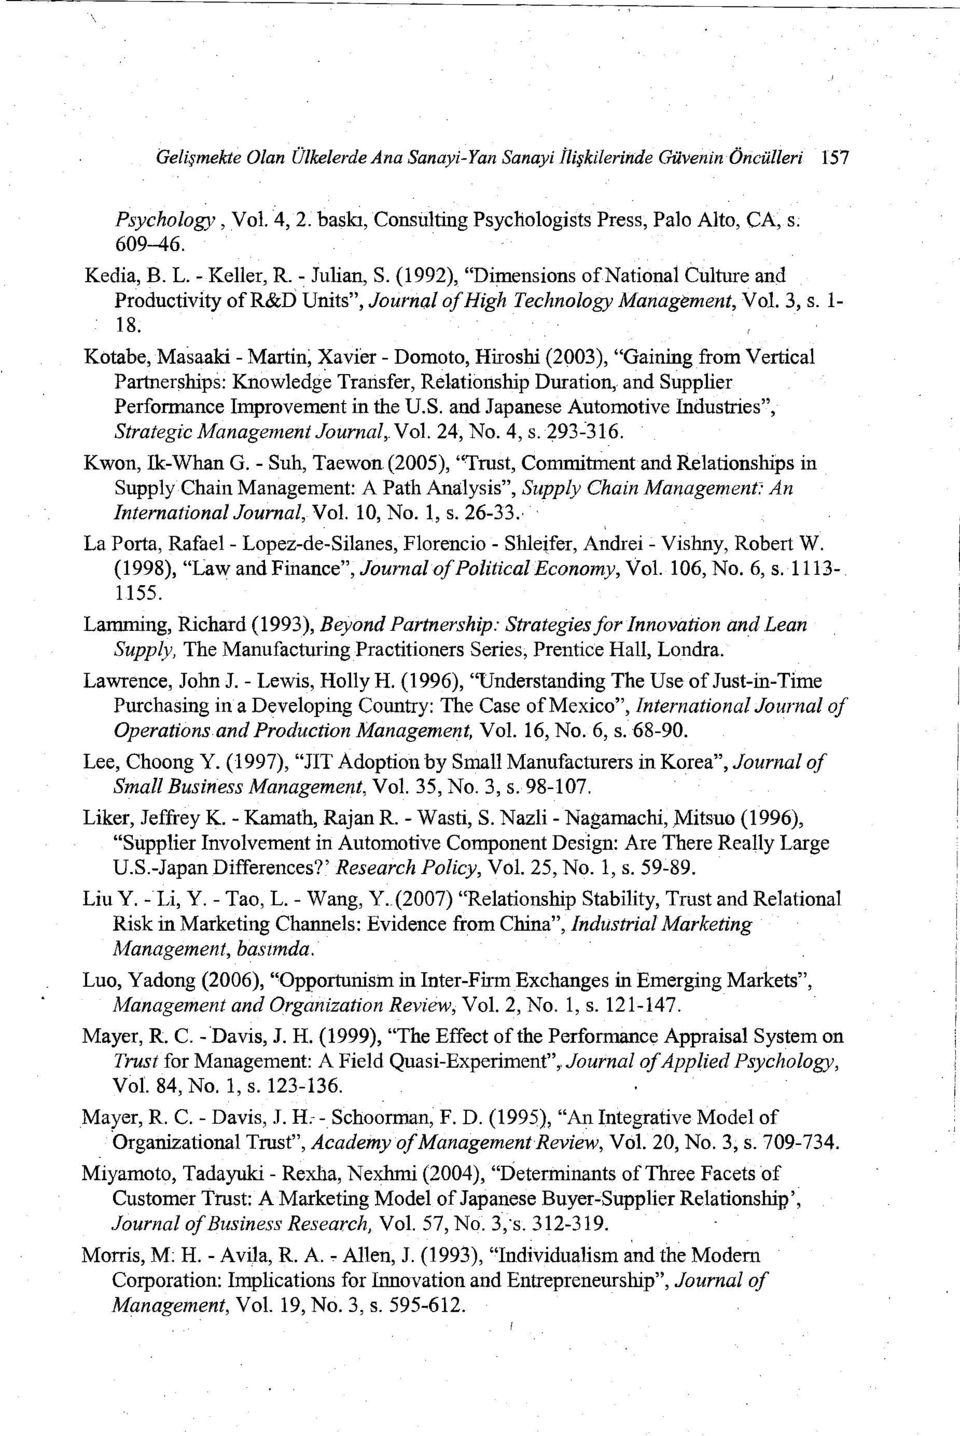 Kotabe,Masaaki - Martin; Xavier - Domoto, Hiroshi (2003), "Gainingfrom Vertical Partnerships: Knowledge Transfer, Relationship Duration, and Su